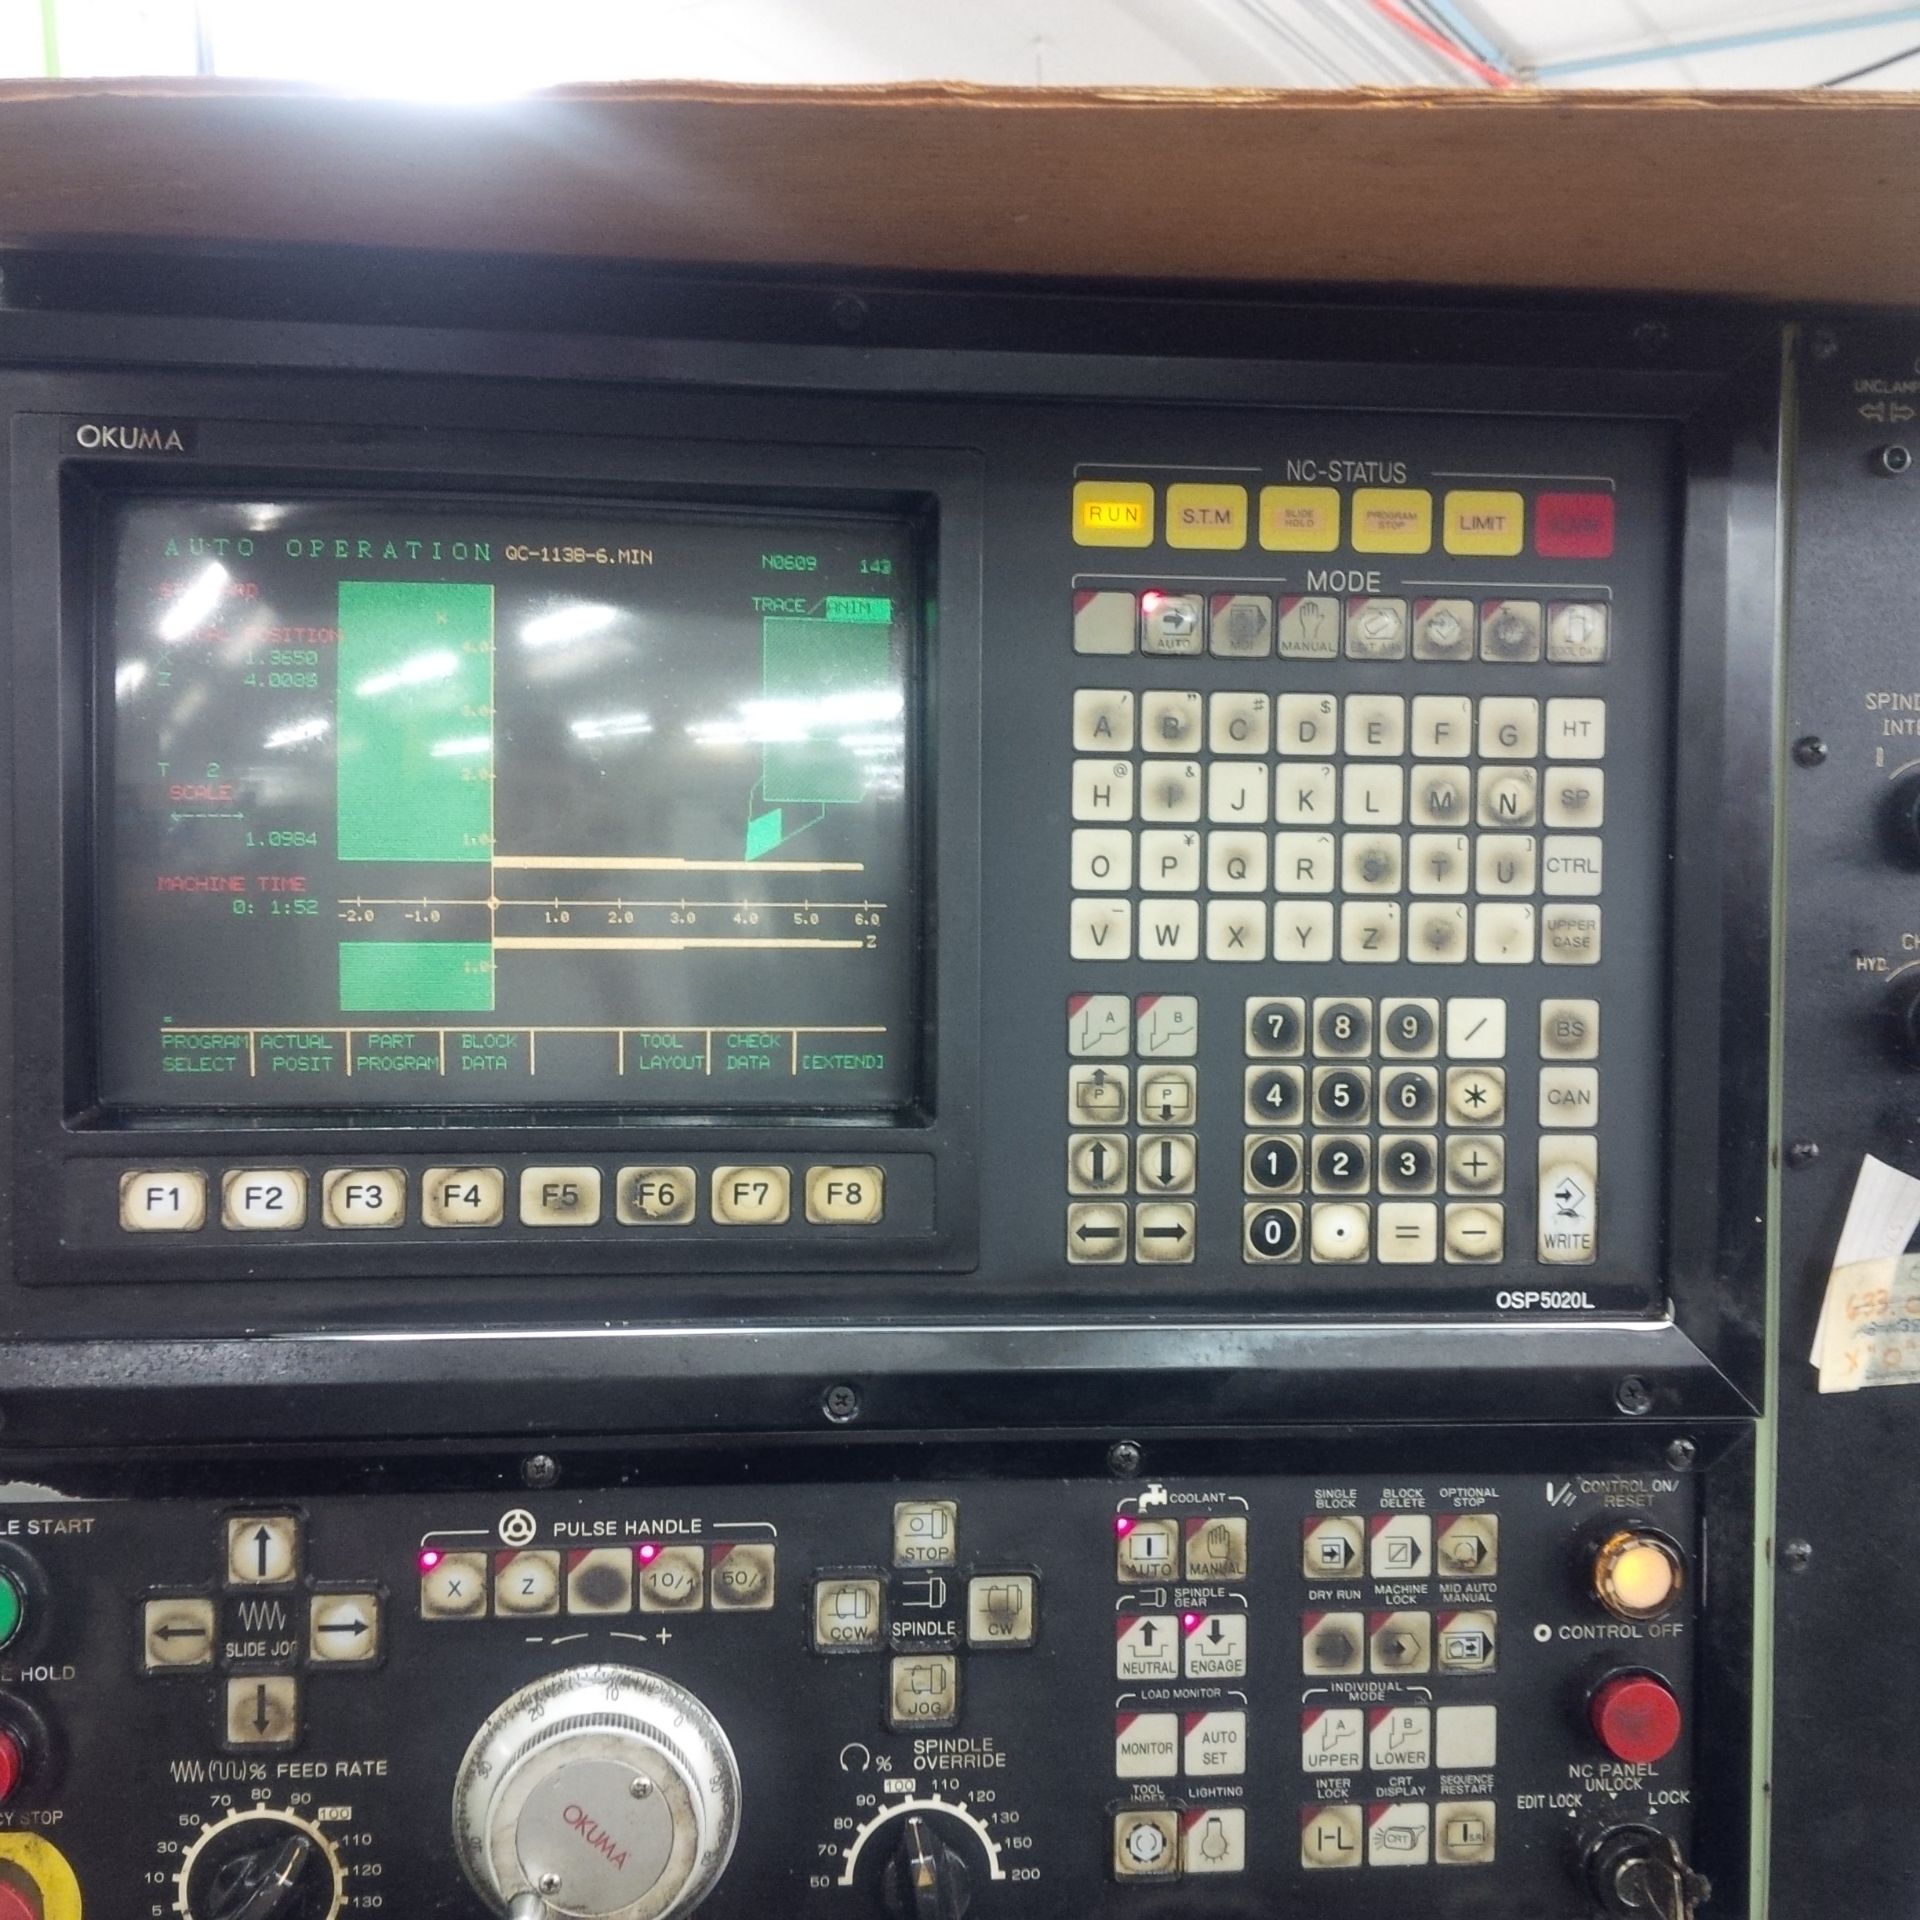 Okuma LB-15 CNC Turning Center, s/n 9986, OSP-5020L CNC Control, 10" 3-Jaw Chuck, Chip Conveyor - Image 2 of 4